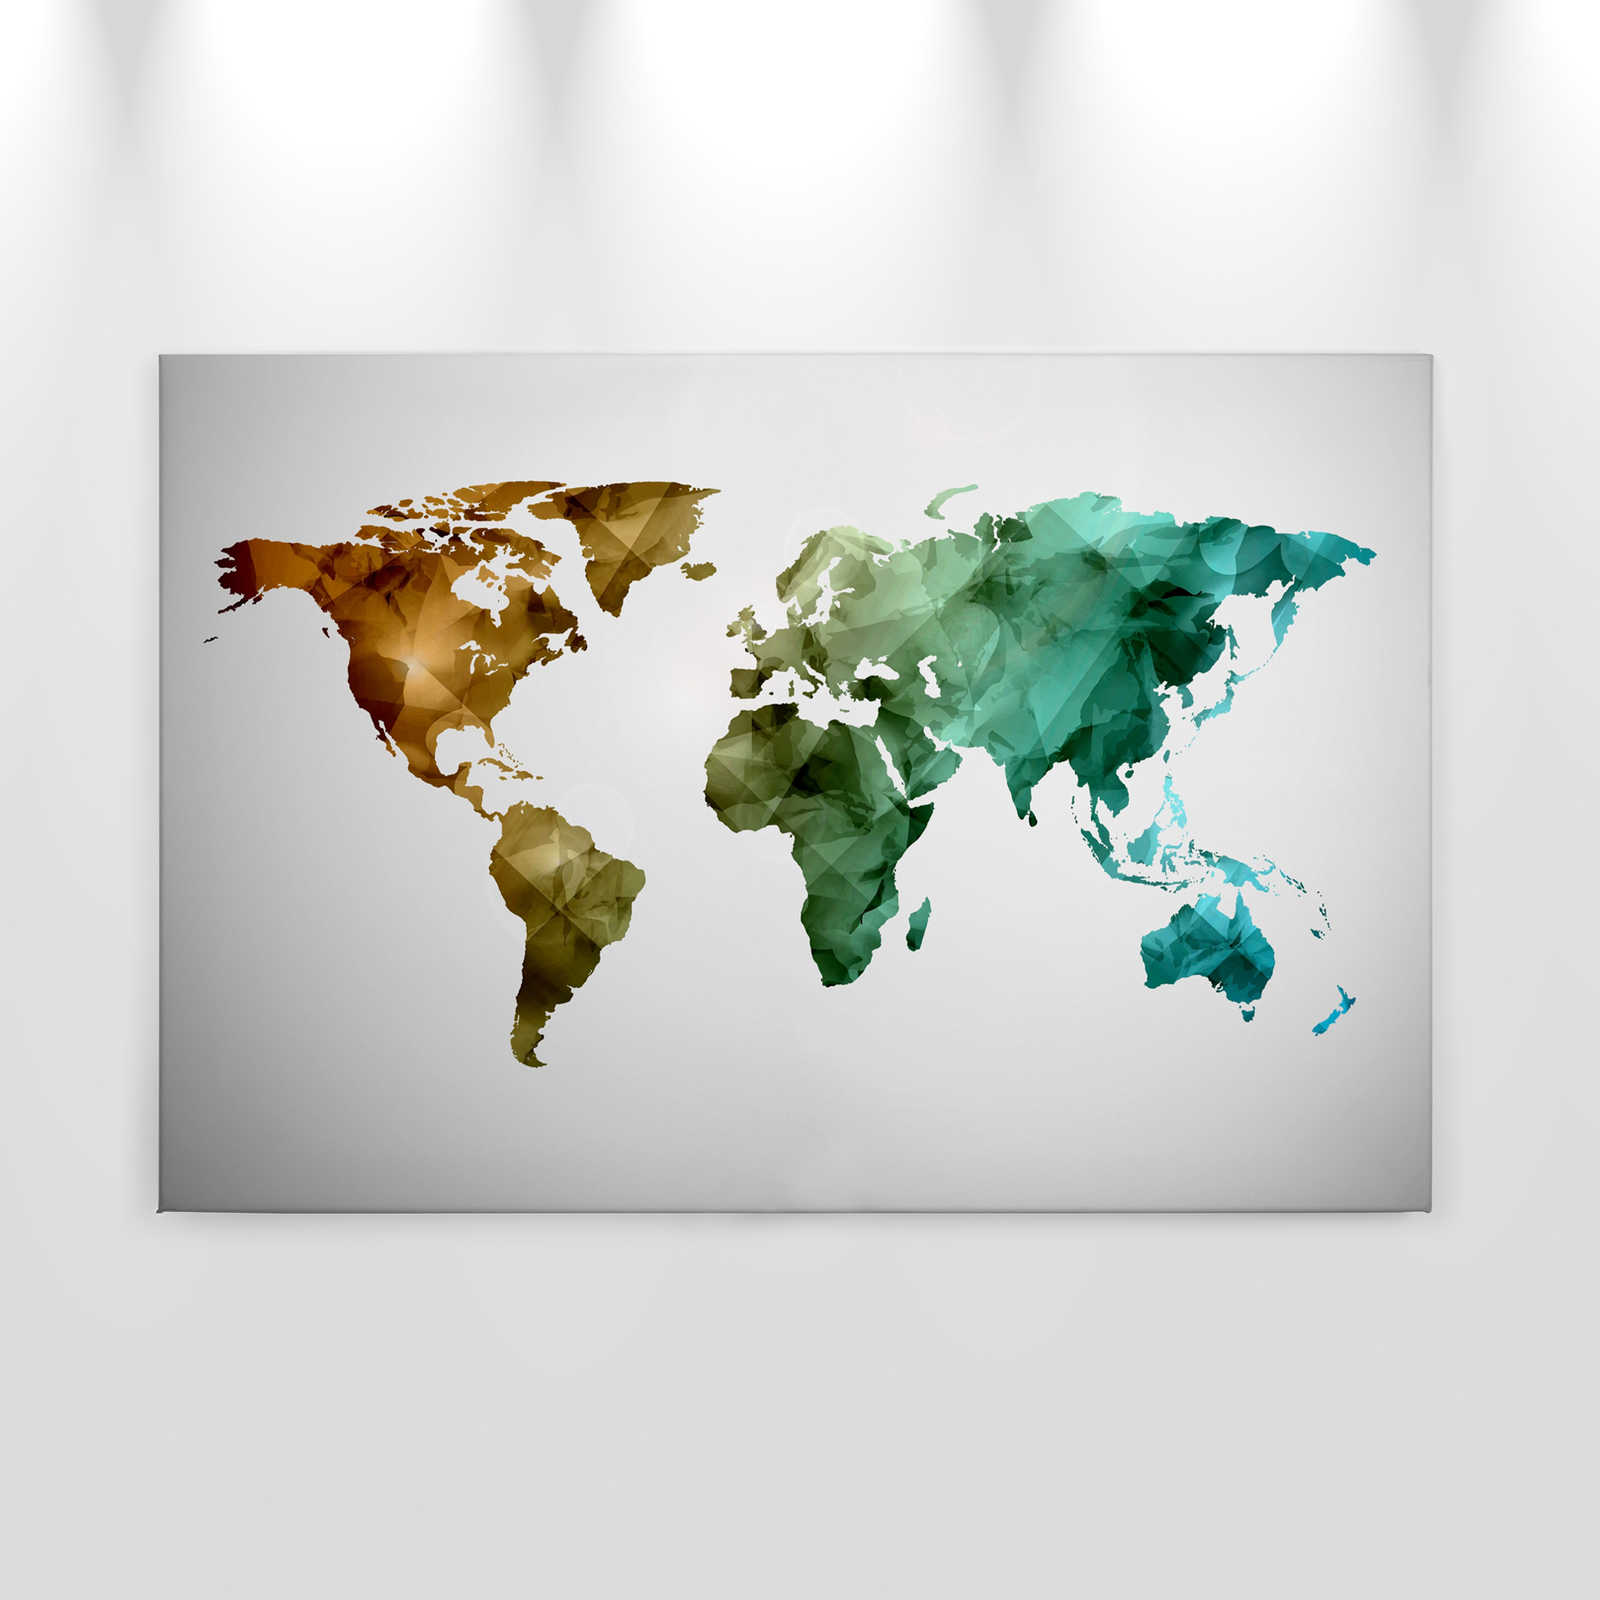             Lienzo con mapamundi de elementos gráficos | WorldGrafic 1 - 0,90 m x 0,60 m
        